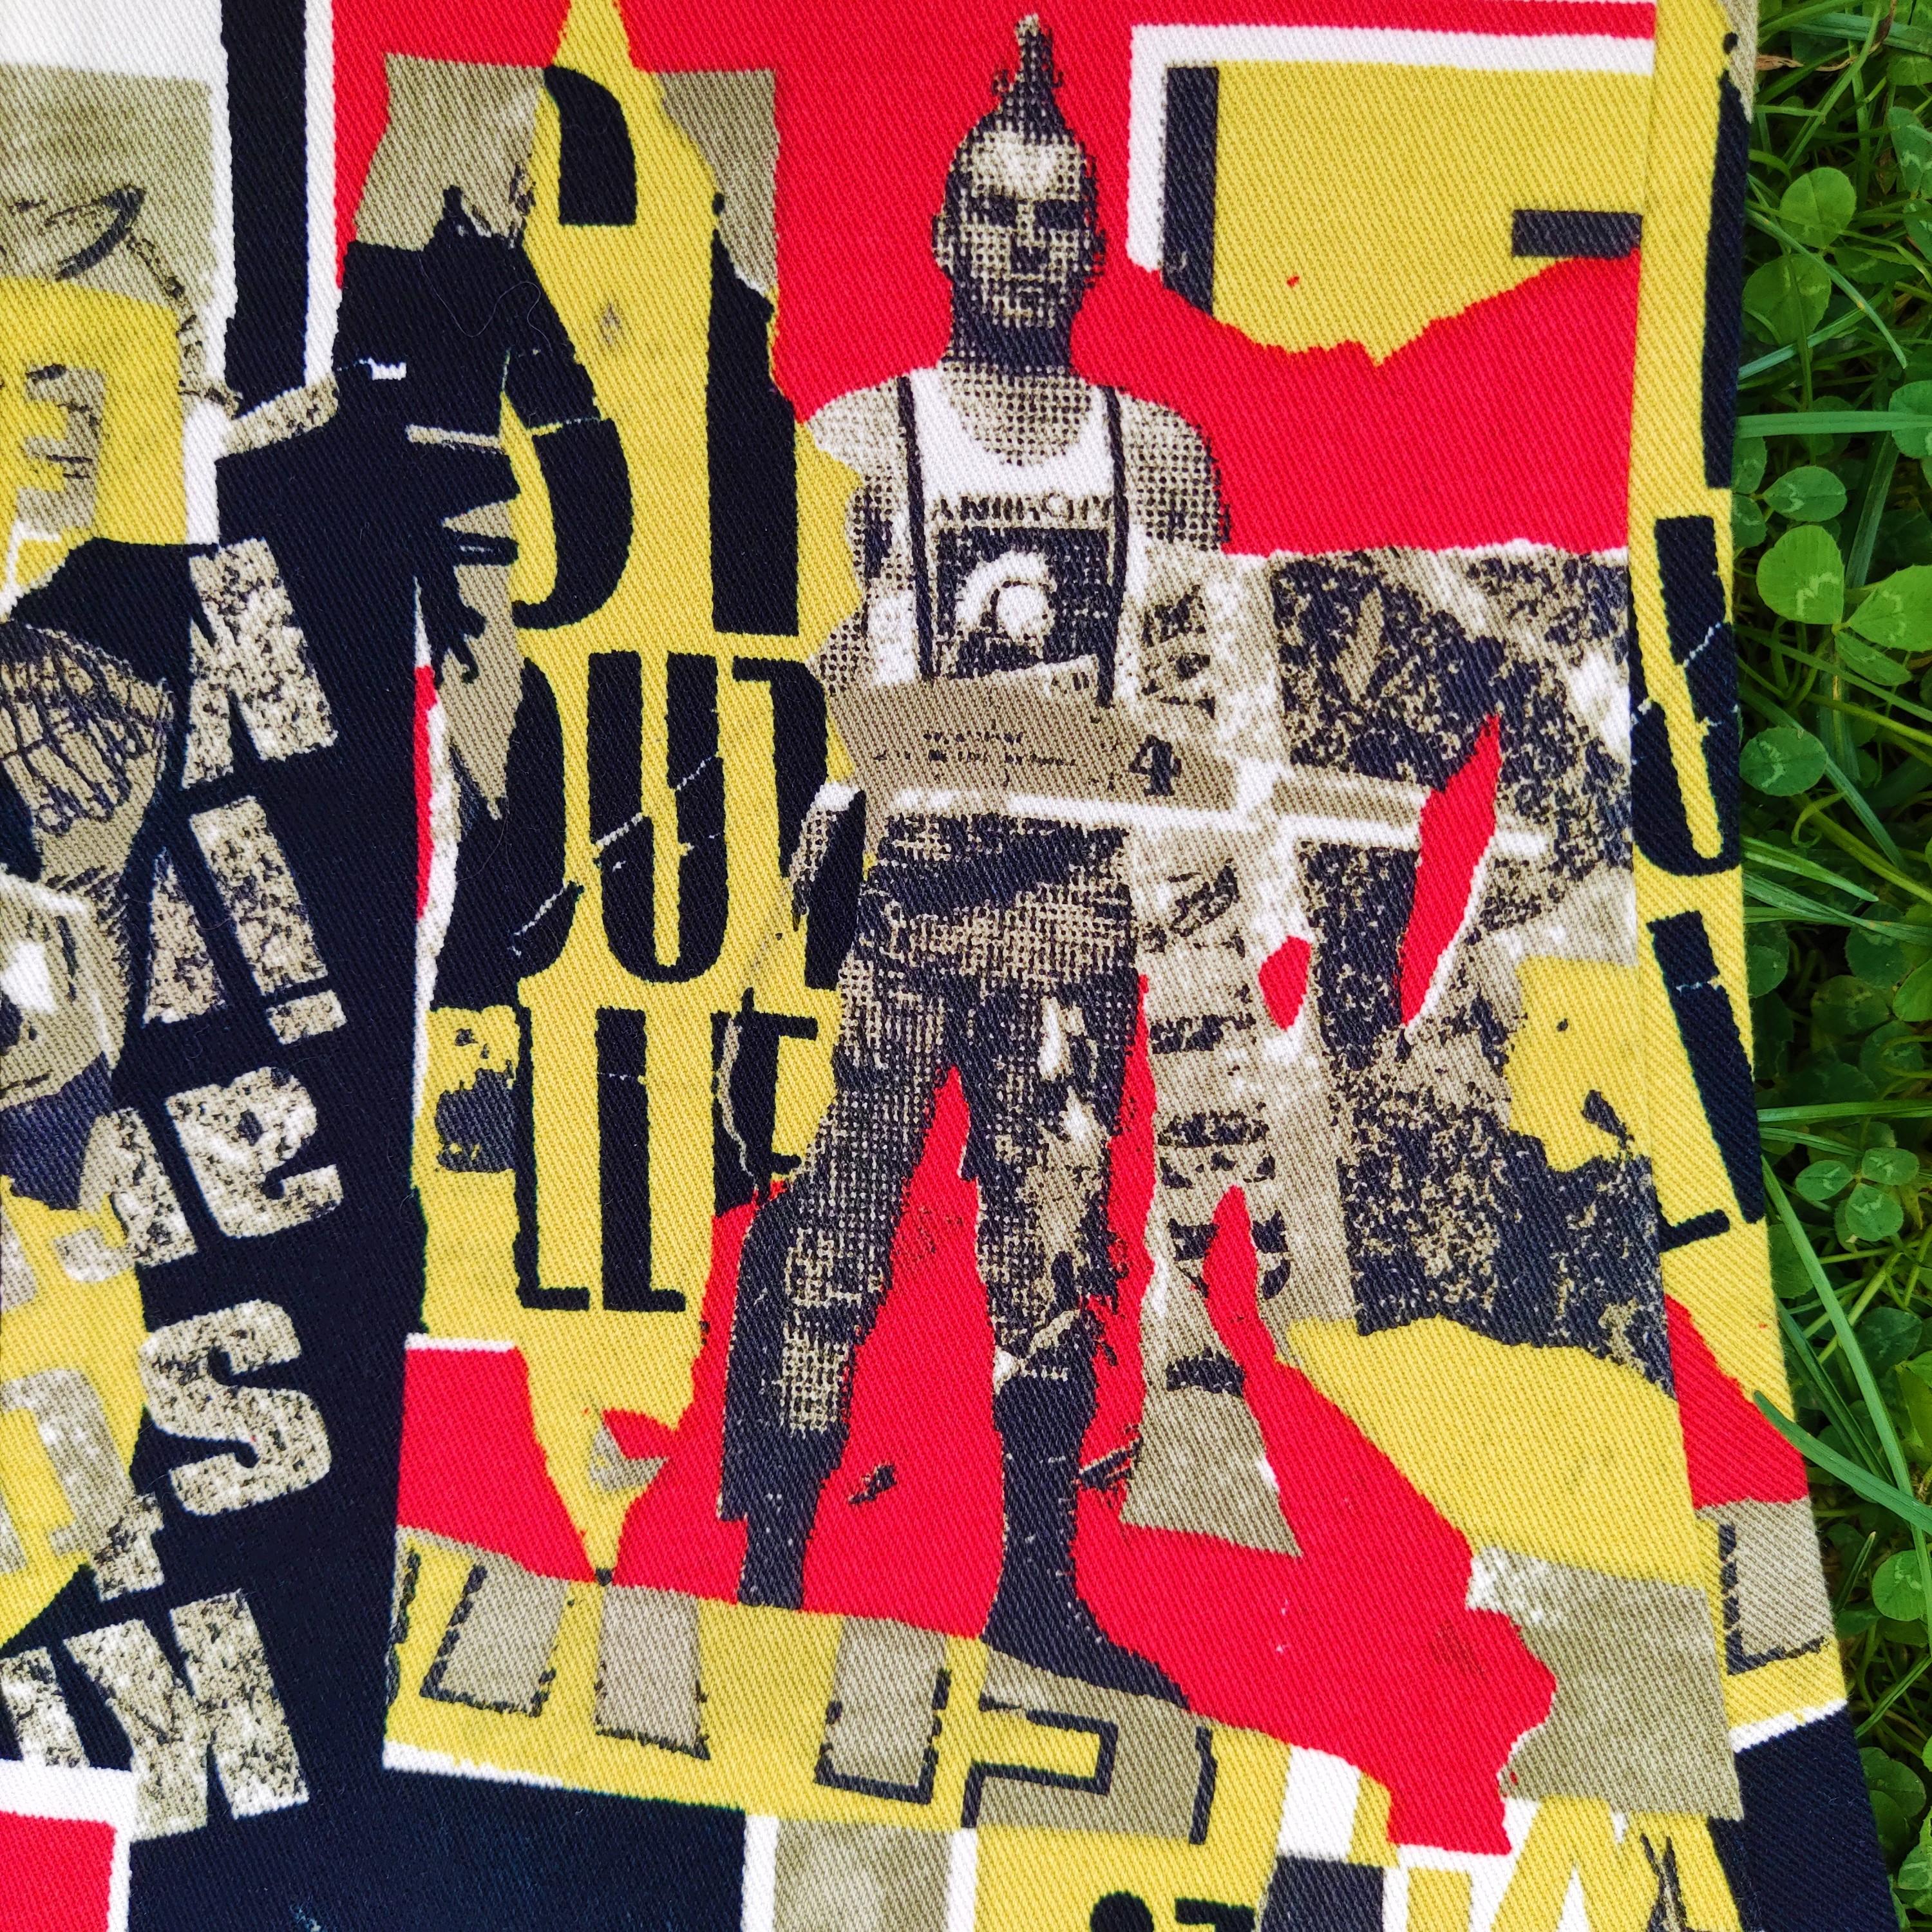 Jean Paul Gaultier Jeans Vintage Anarchy Fight Racism Punk 90s Trousers Pants For Sale 4